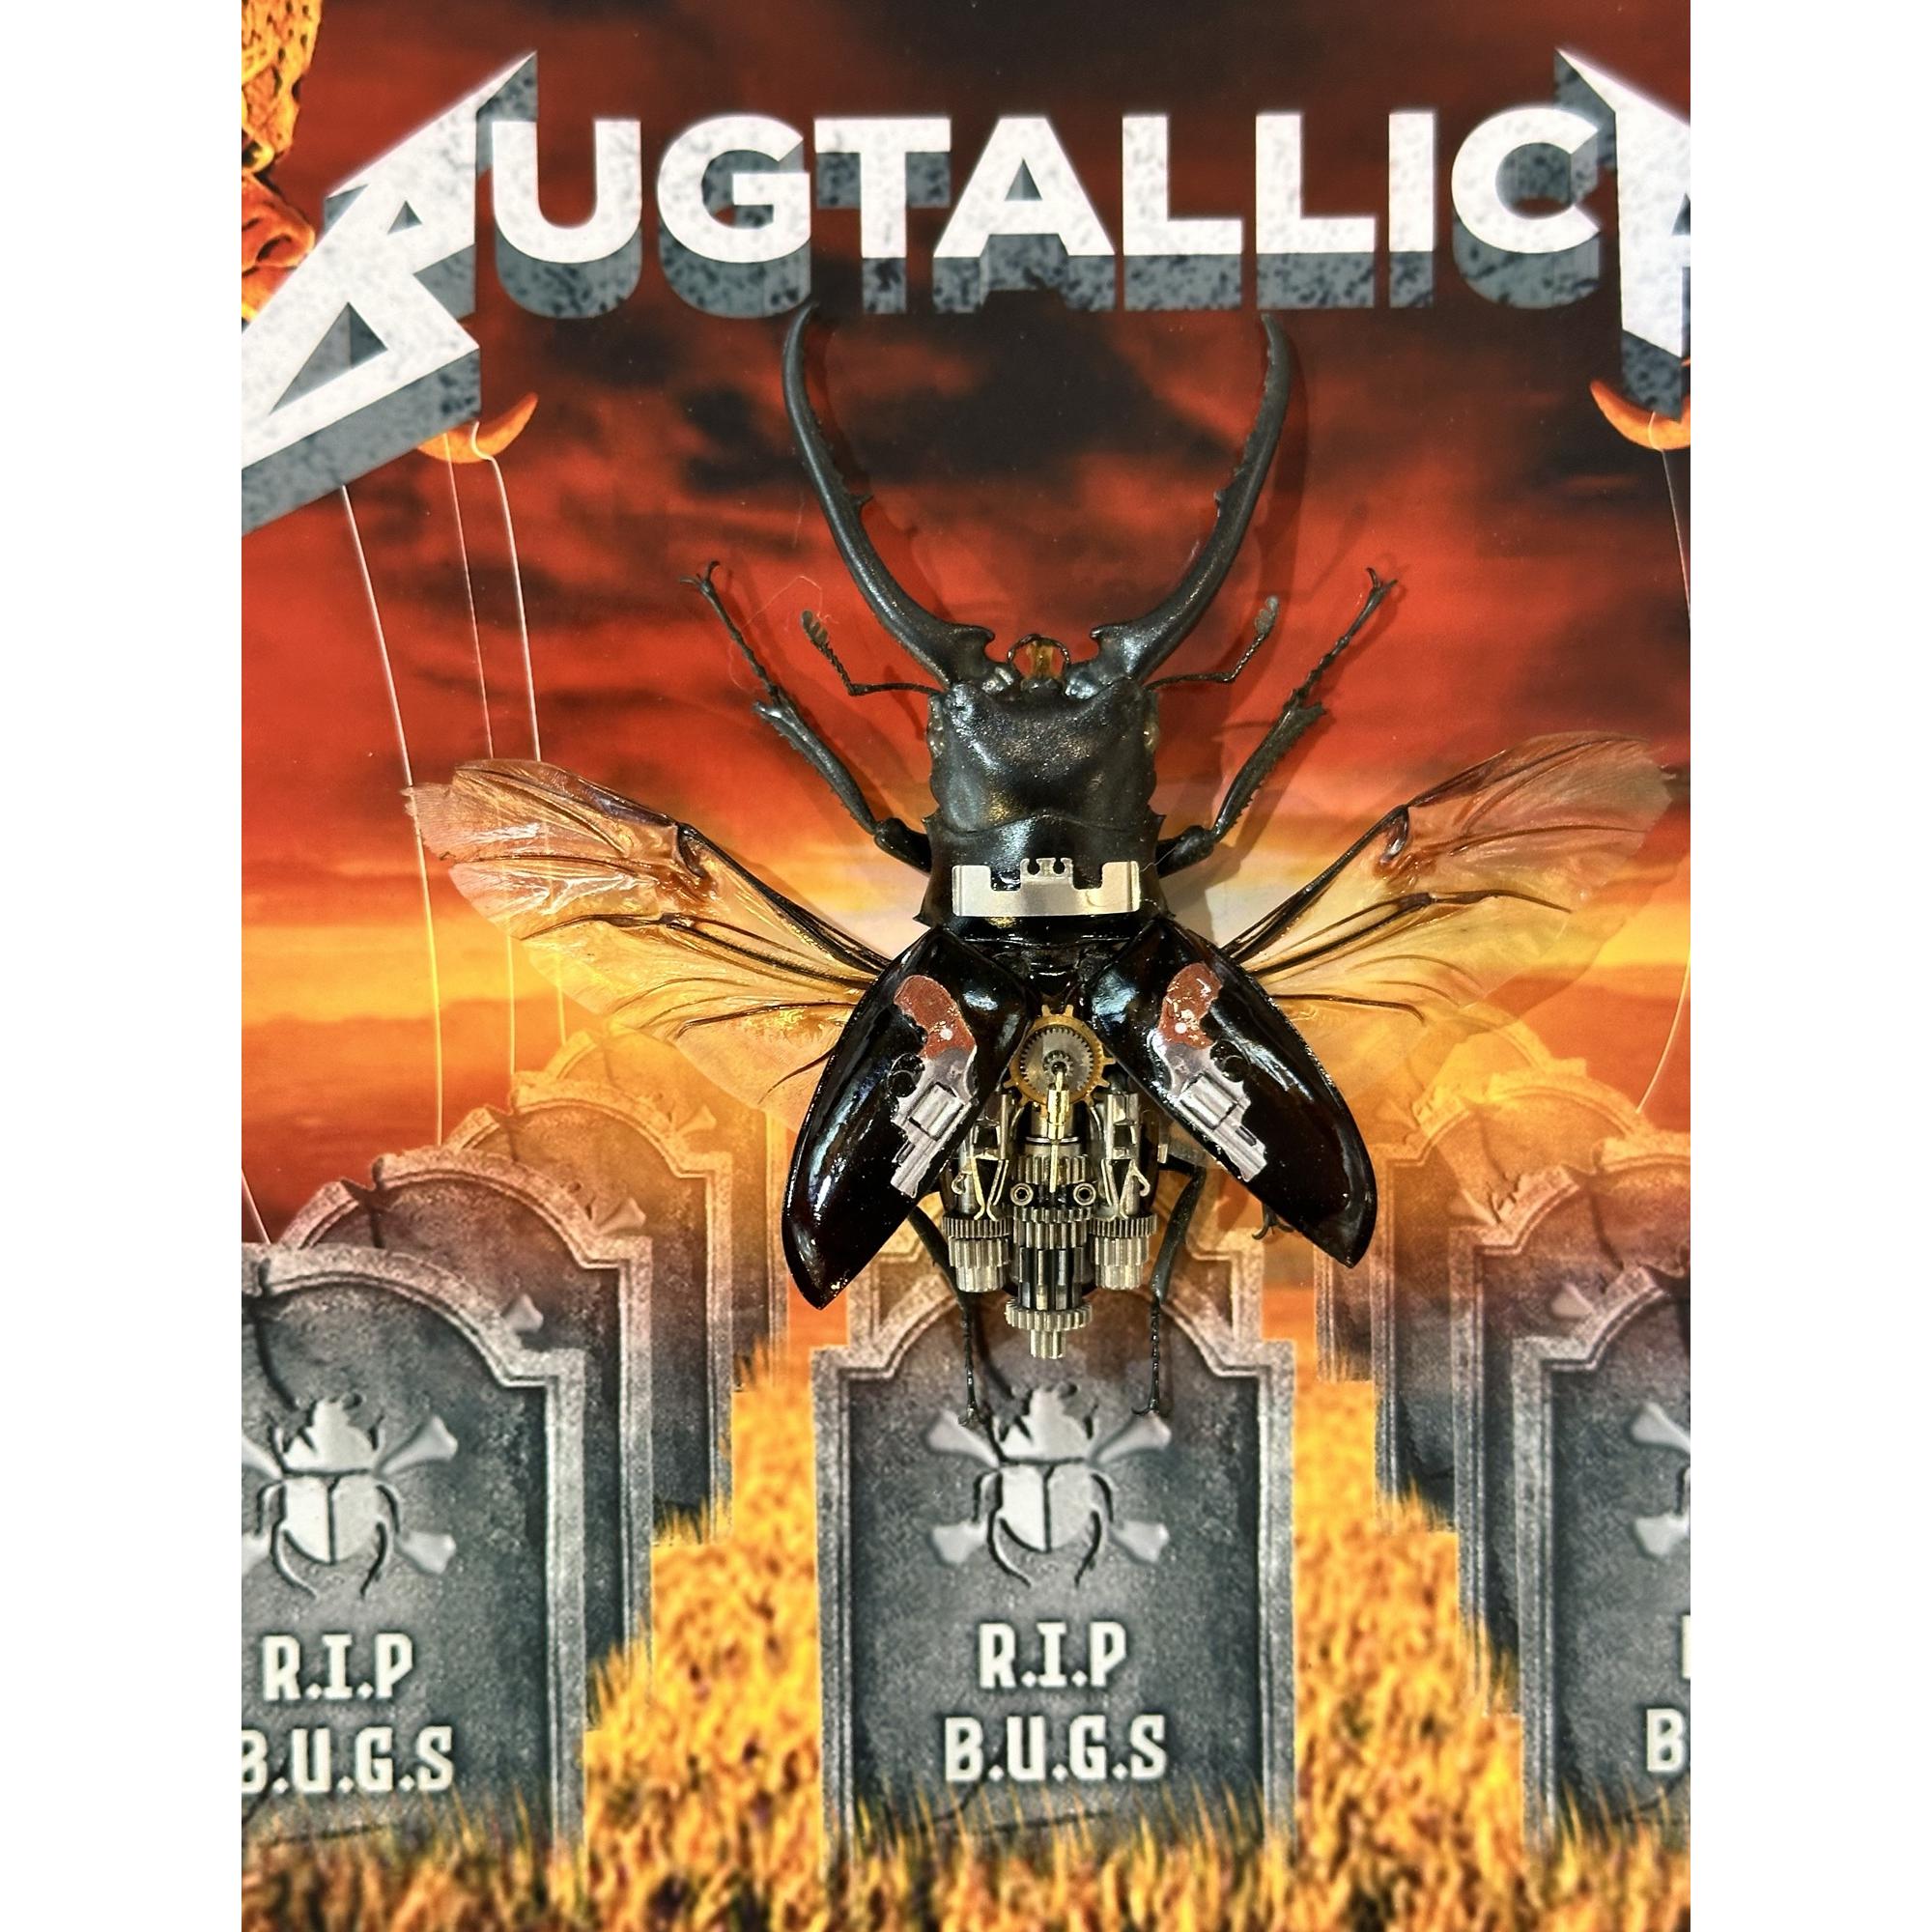 Steampunk Beetle, Bugtallica Prehistoric Online